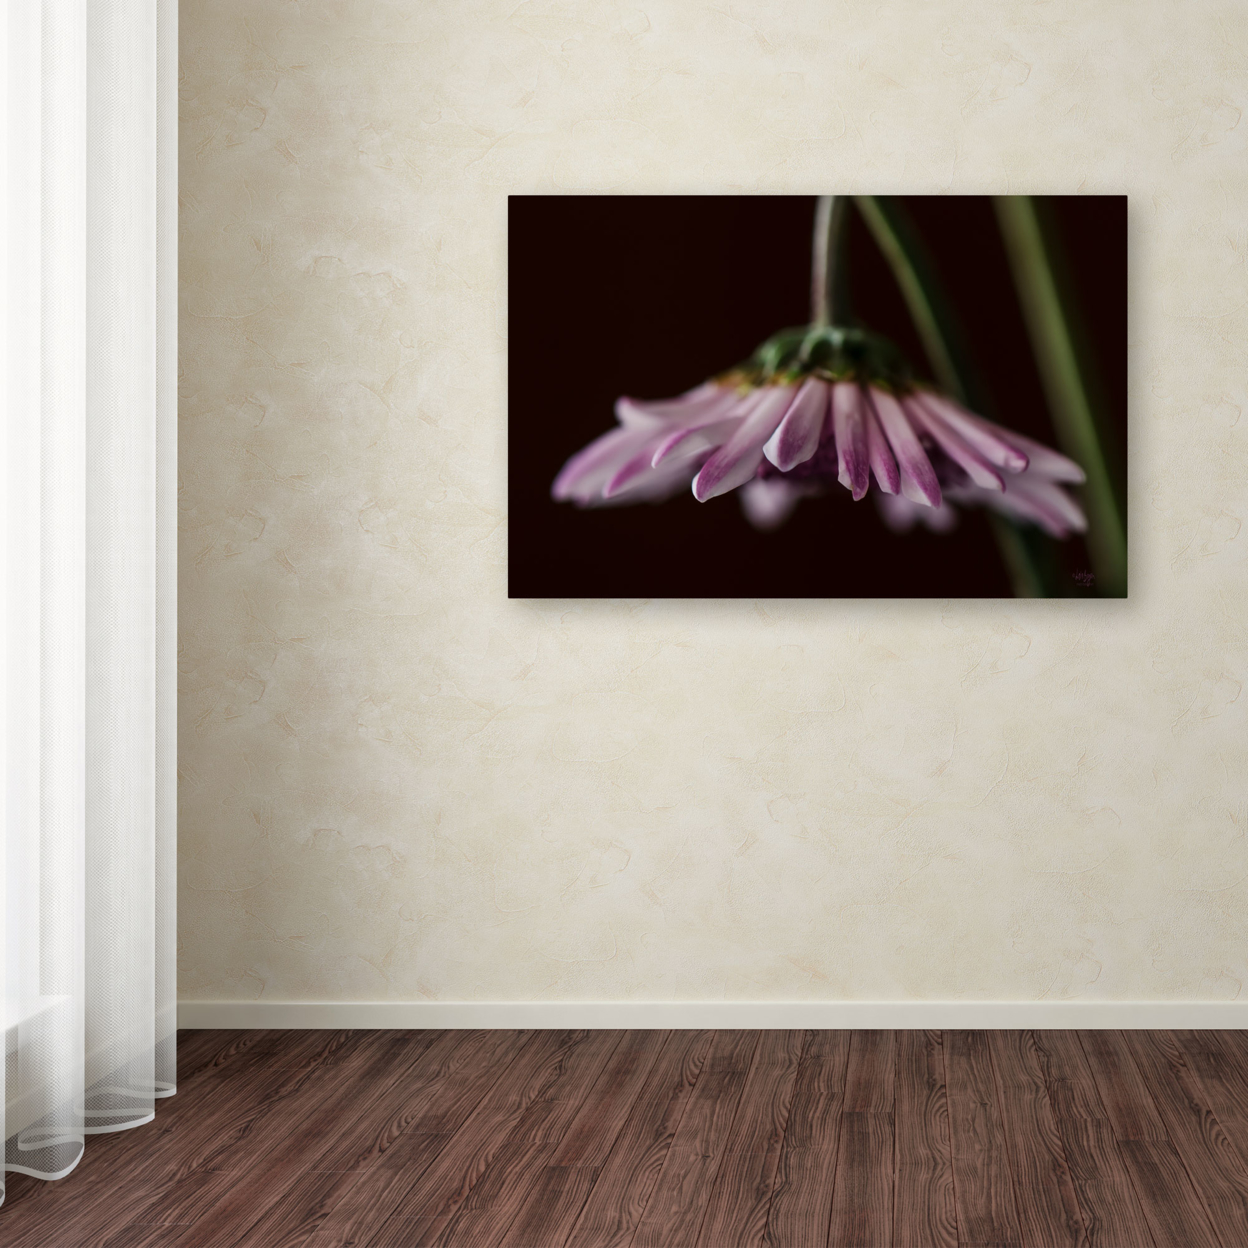 Lois Bryan 'Drooping Flower' Canvas Art 16 X 24